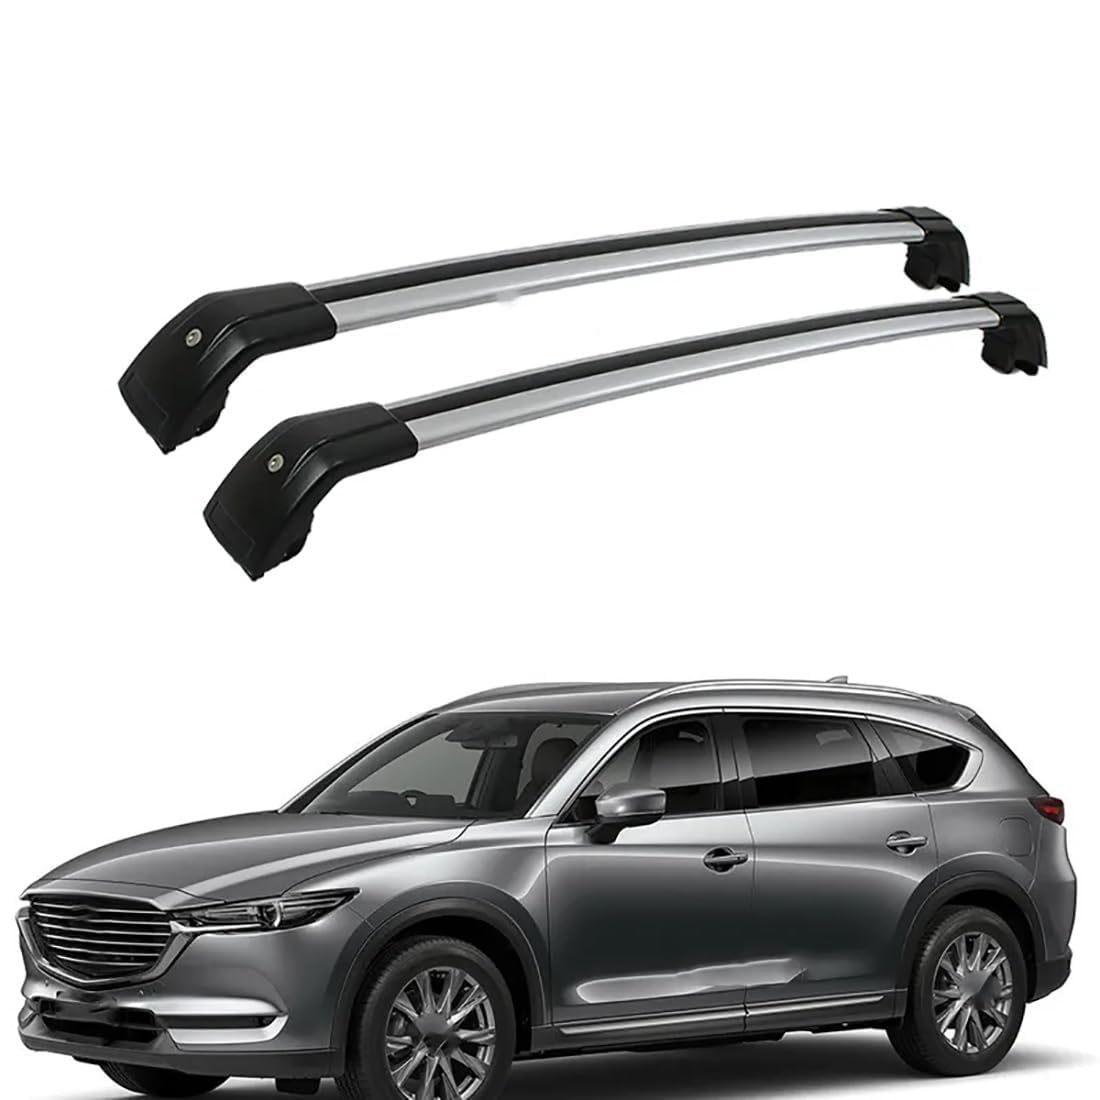 2 Stück Auto Dachträger für Mazda CX8 5door SUV 2018+, Aluminium Dachgepäckträger Dachgepäckablage Querträger Relingträger, Lastenträger GepäCktransport Zubehör,C-Silverblack von ZDJBFA